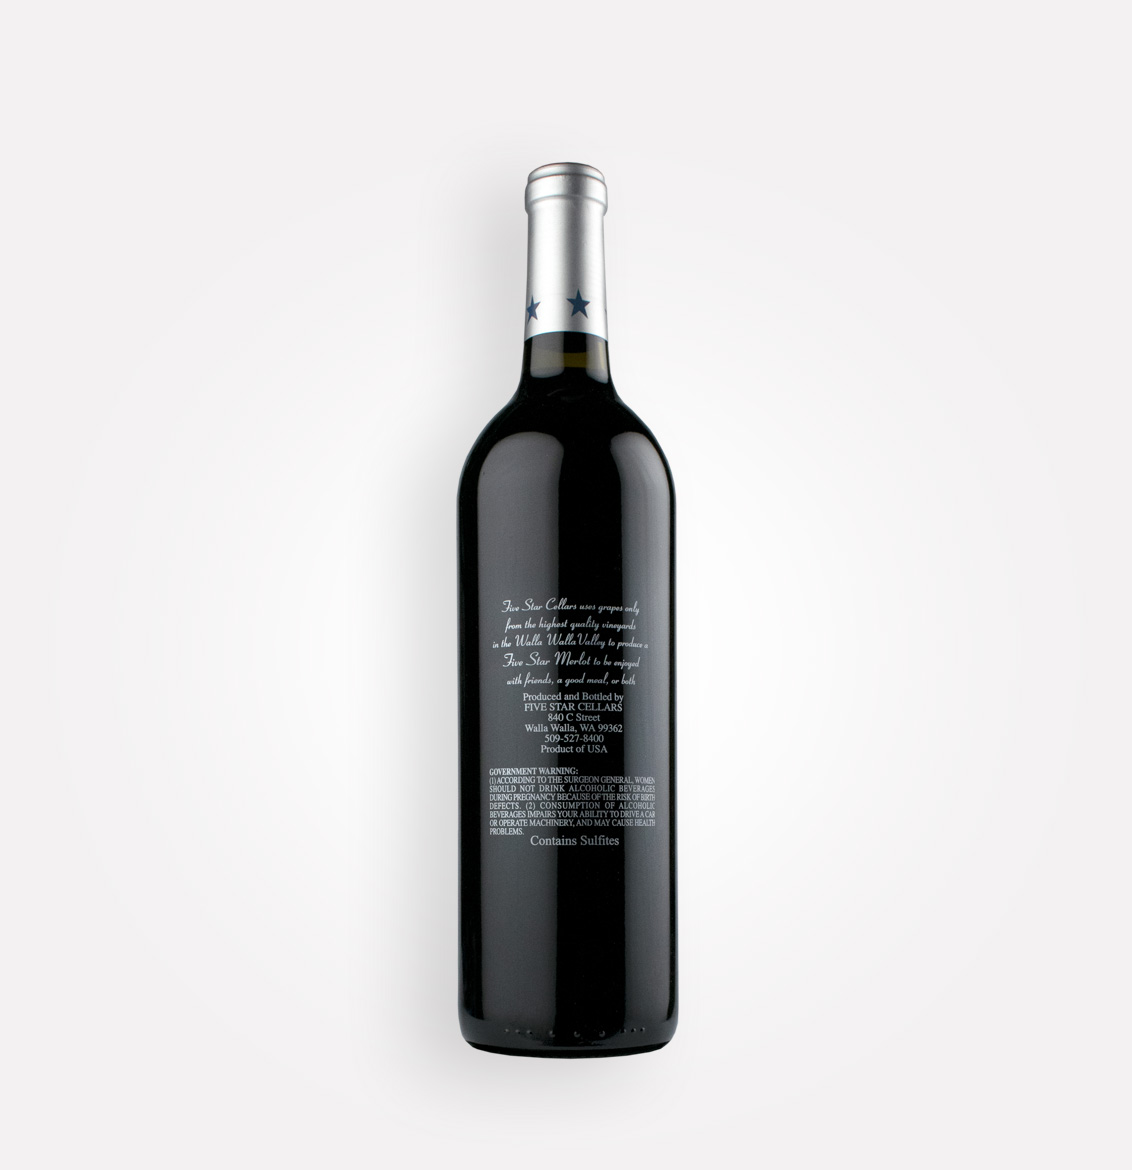 Back bottle view of Five Star Cellars 2016 Merlot wine from Washington's Walla Walla Valley